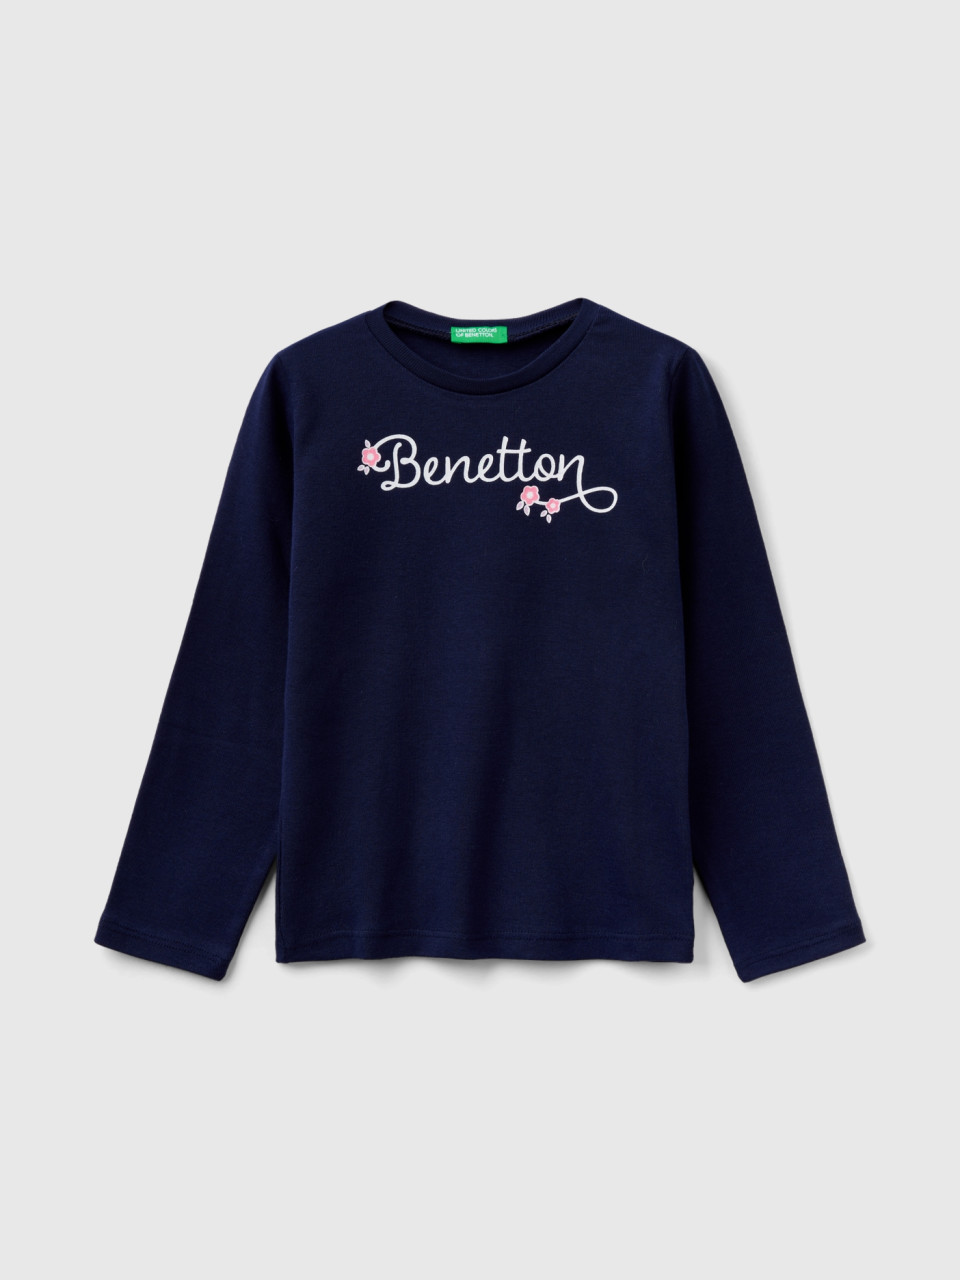 Benetton, Long Sleeve T-shirt With Glittery Print, Dark Blue, Kids